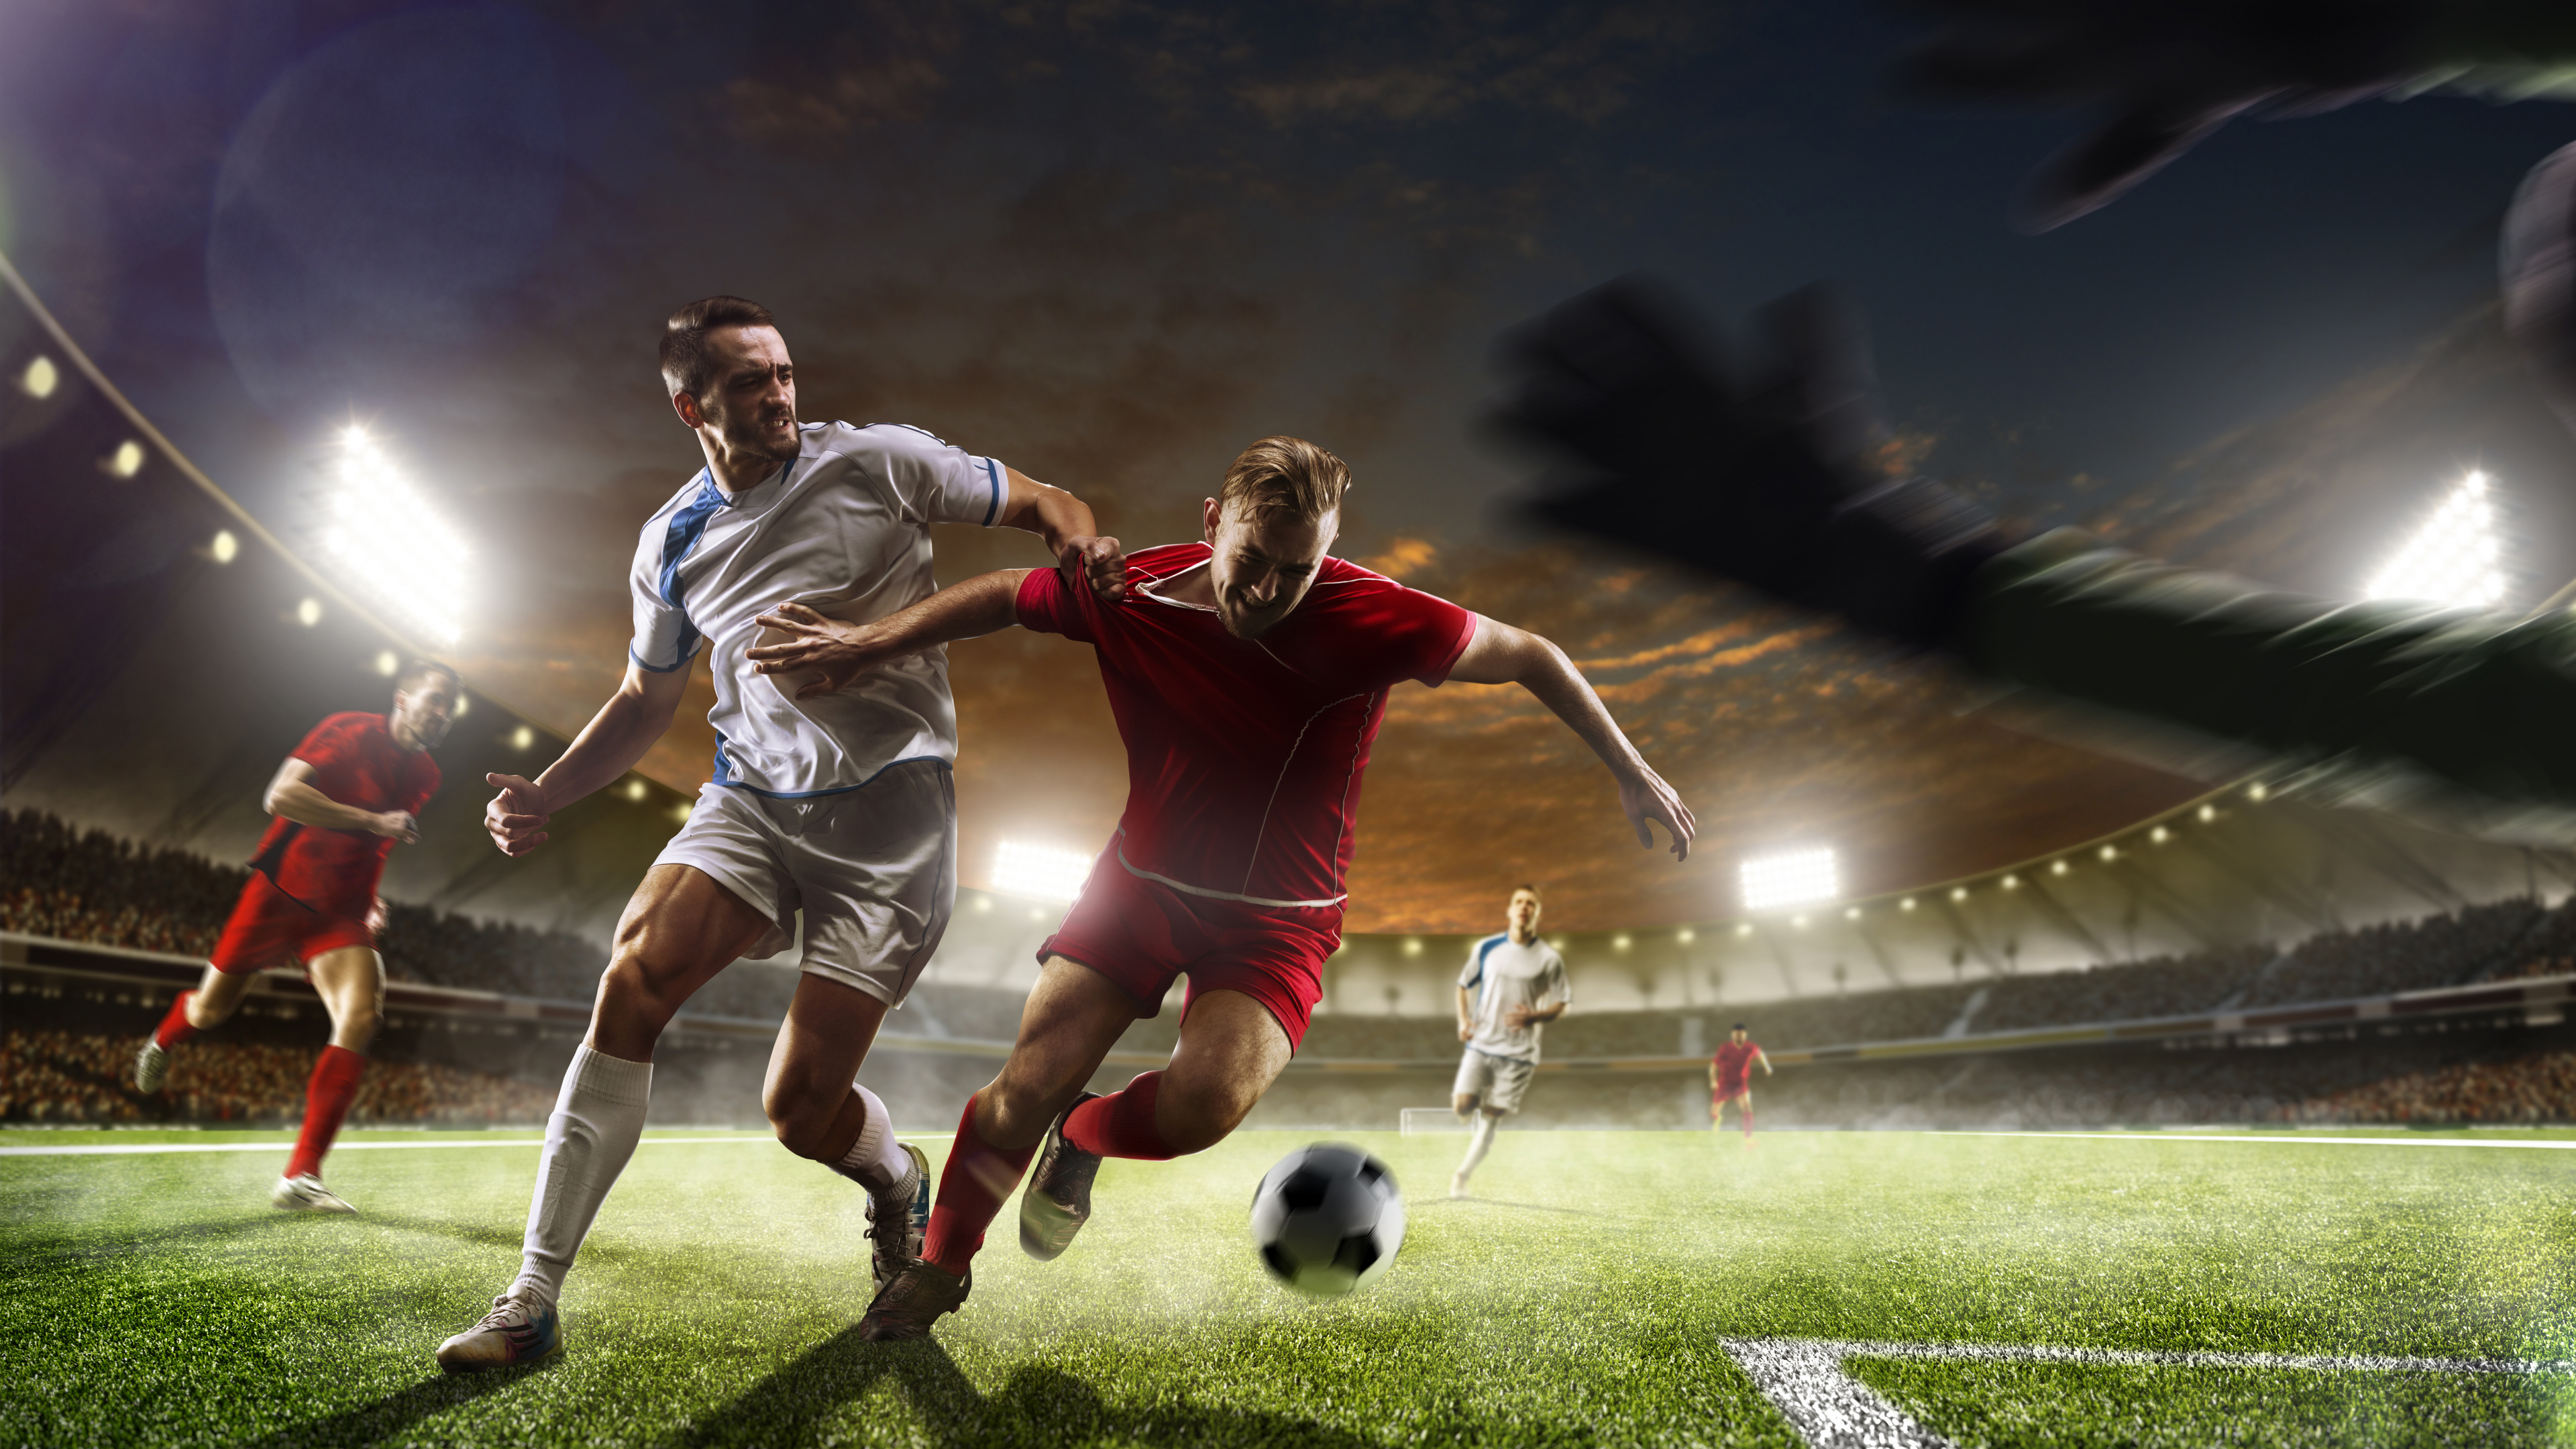 2 Hommes Jouant au Football Sur Terrain en Herbe Verte Pendant la Nuit. Wallpaper in 3840x2160 Resolution